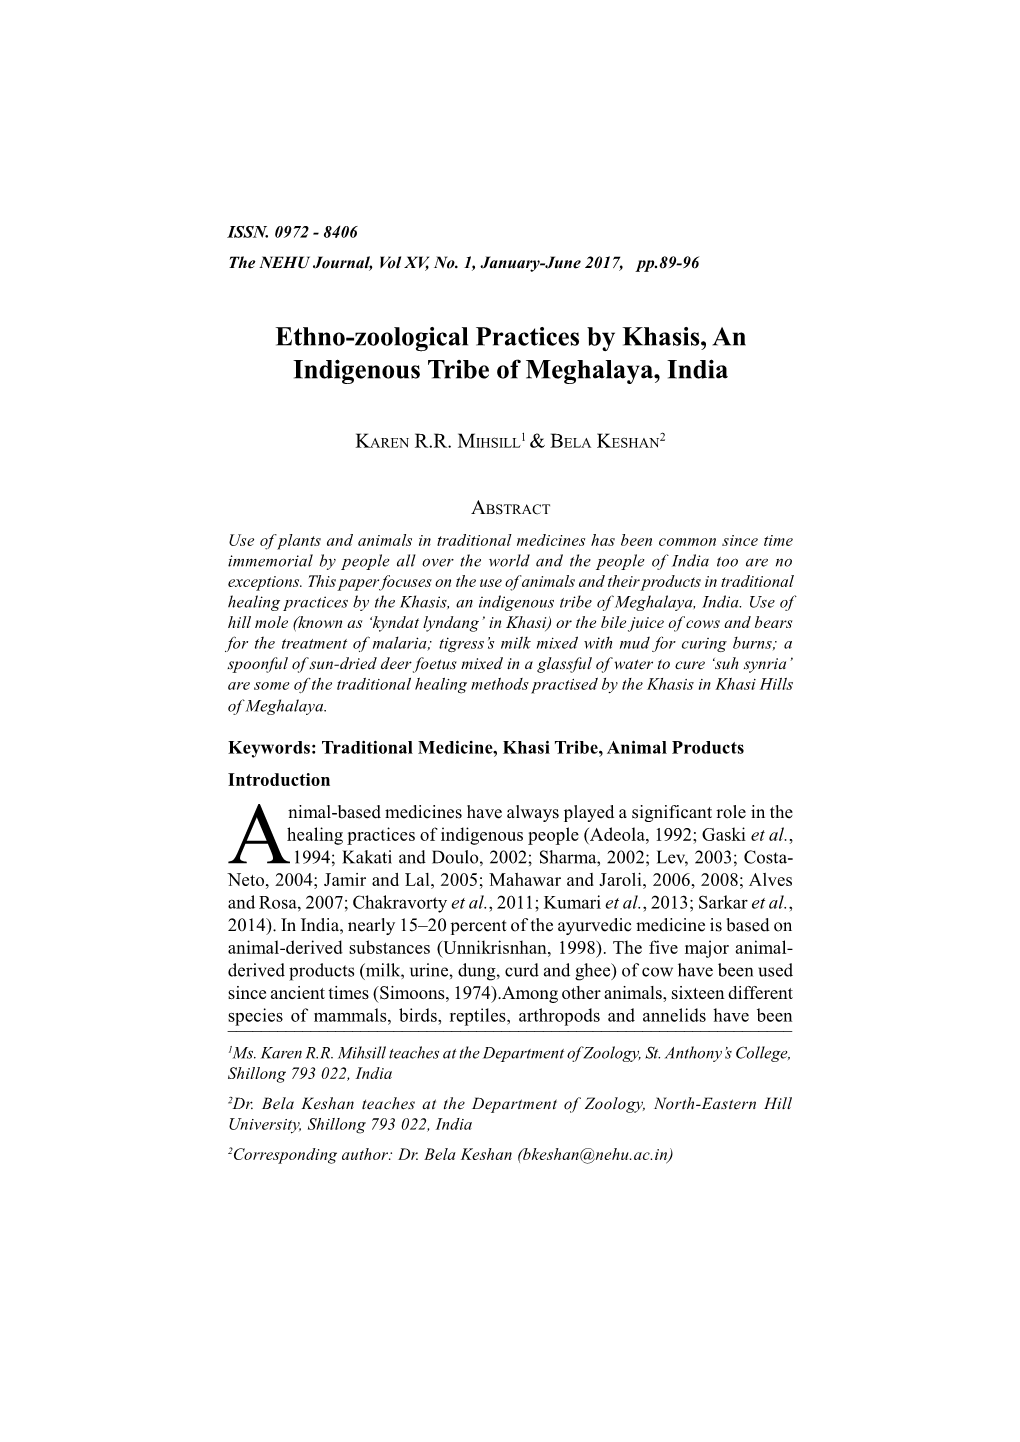 Ethno-Zoological Practices by Khasis, an Indigenous Tribe of Meghalaya, India